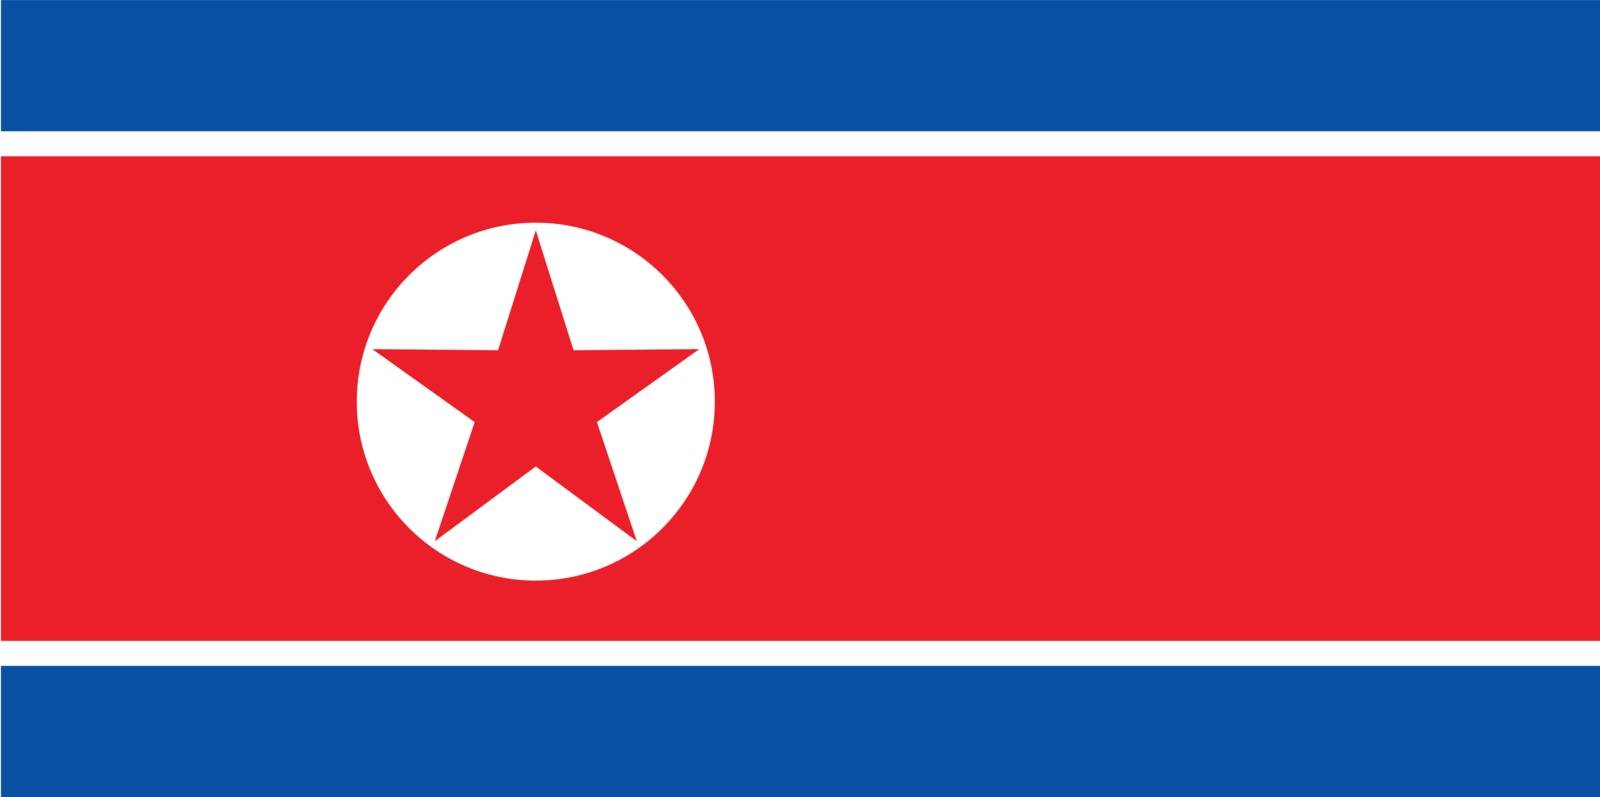 Flag of The Dempcratic People's Republic of Korea